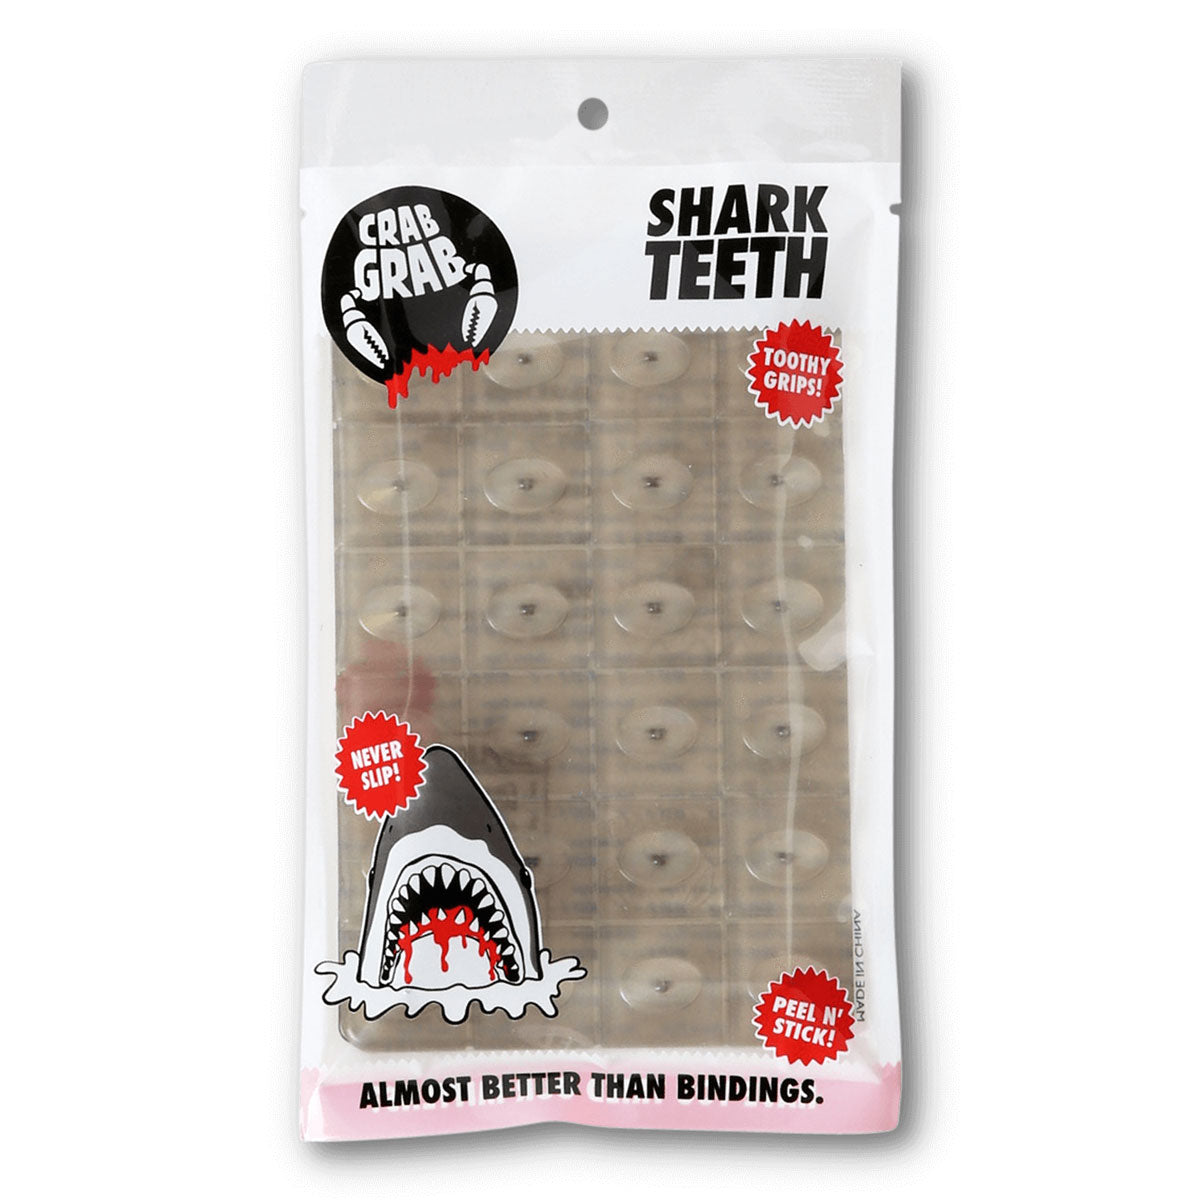 Crab Grab Shark Teeth Snowboard Stomp Pad - Smoke image 2